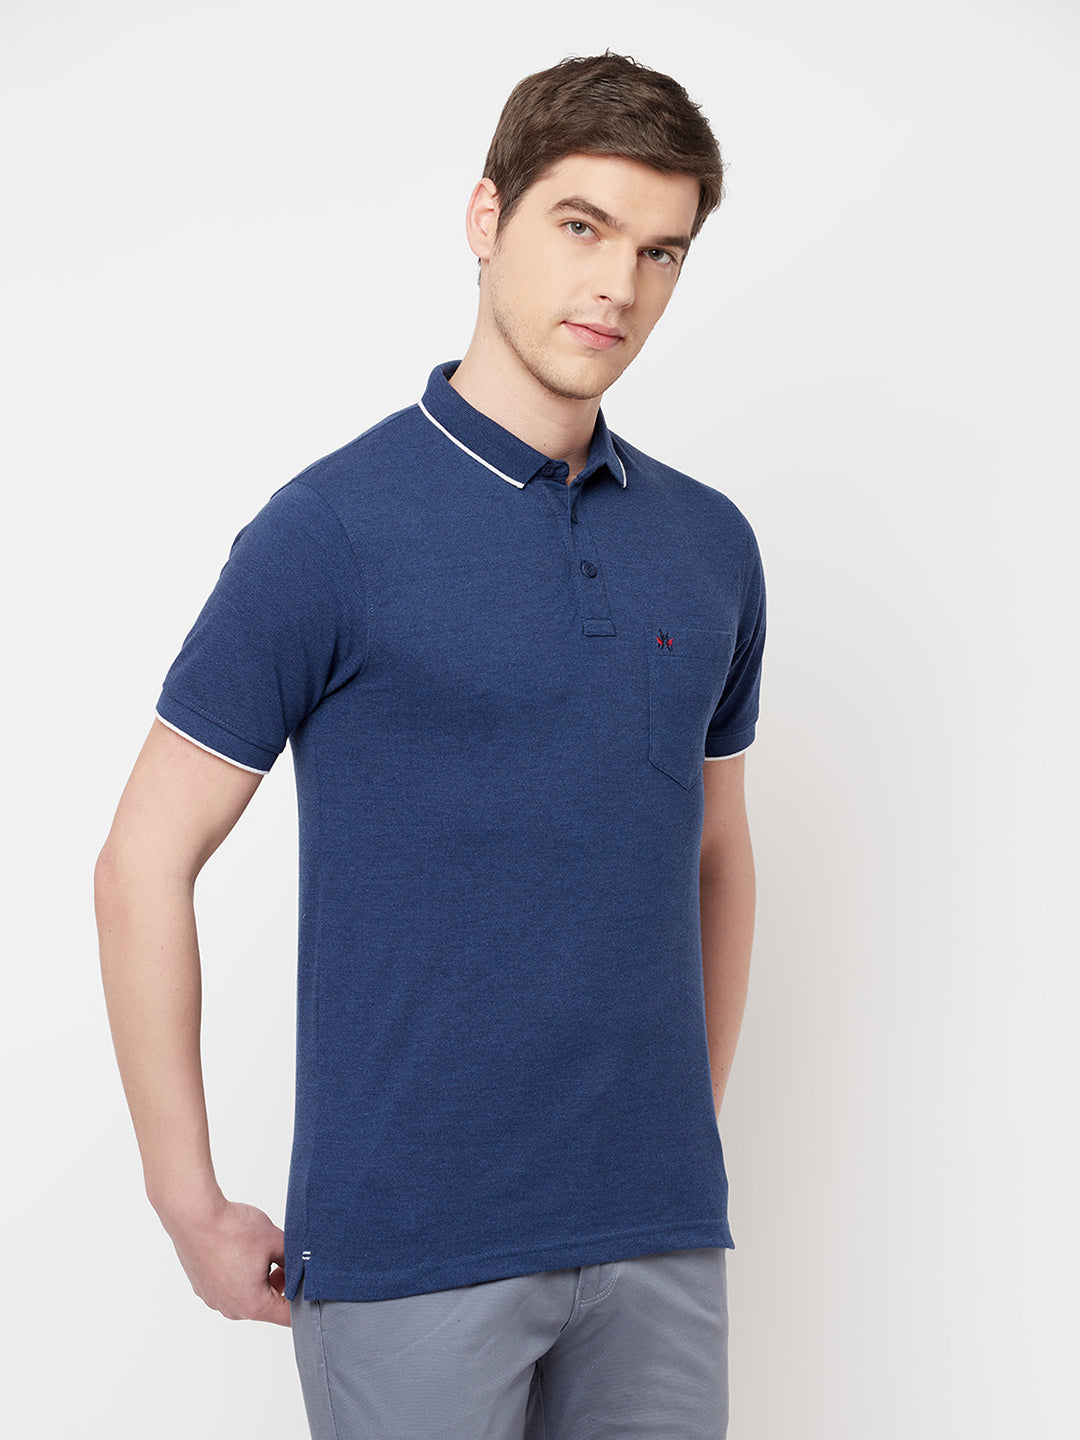 Blue Polo T-shirt - Men T-Shirts